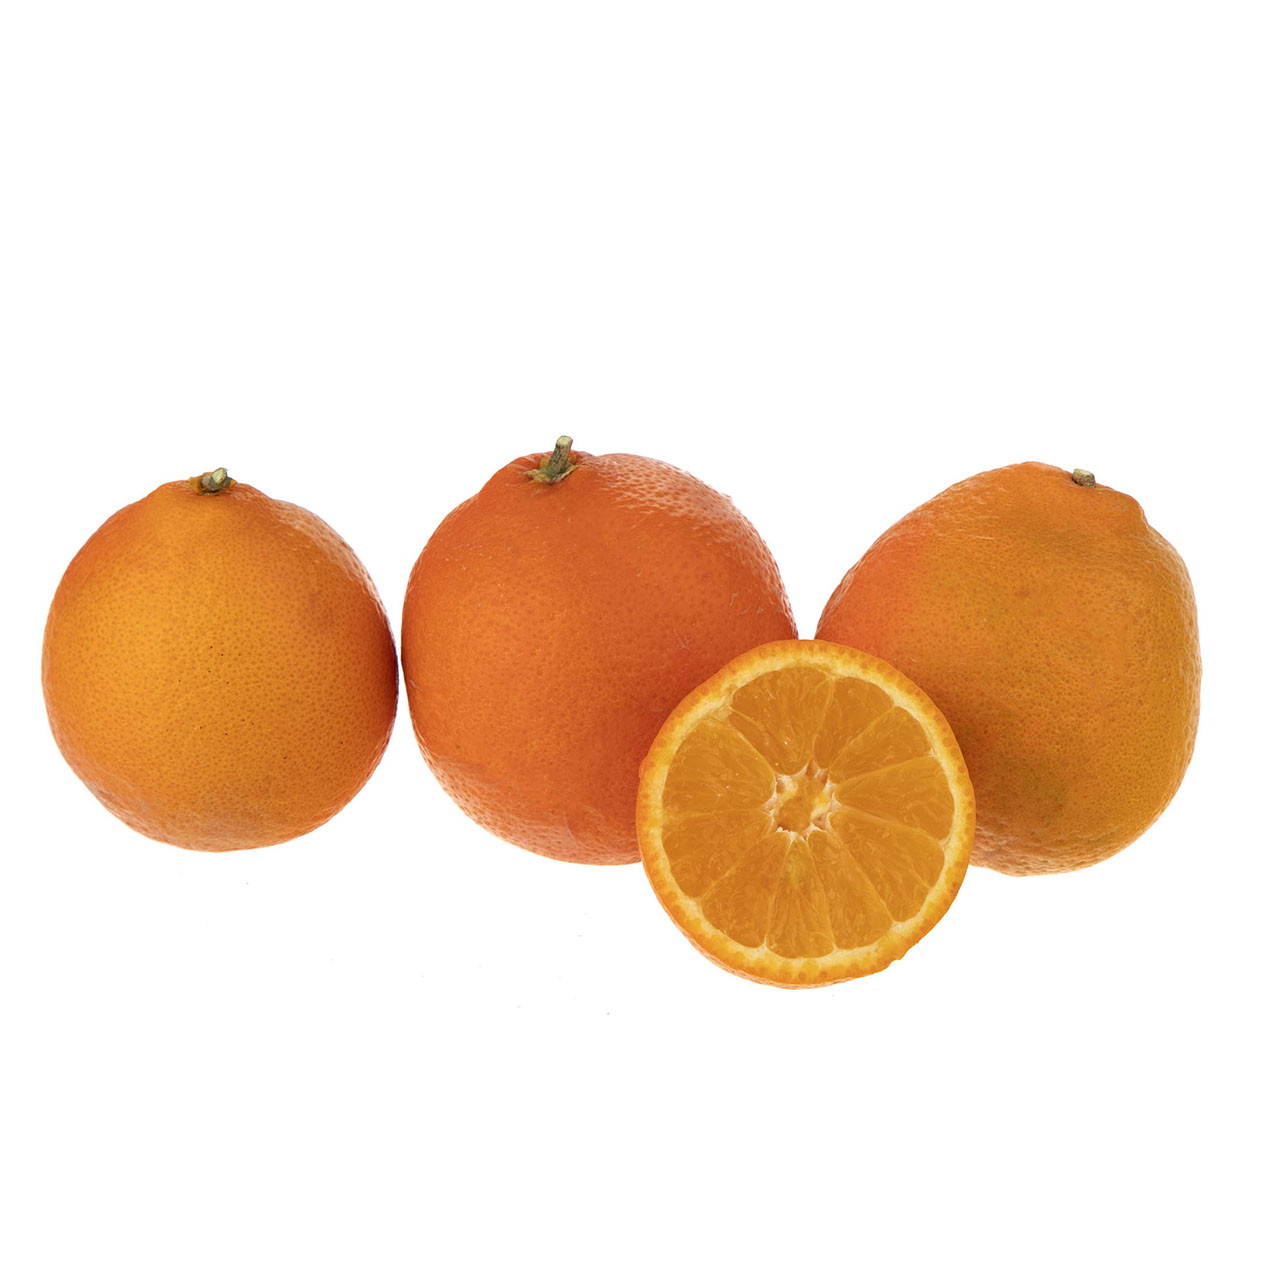 نارنگی گلابی آنجلو - 1 کیلوگرم (حداقل 4 عدد)